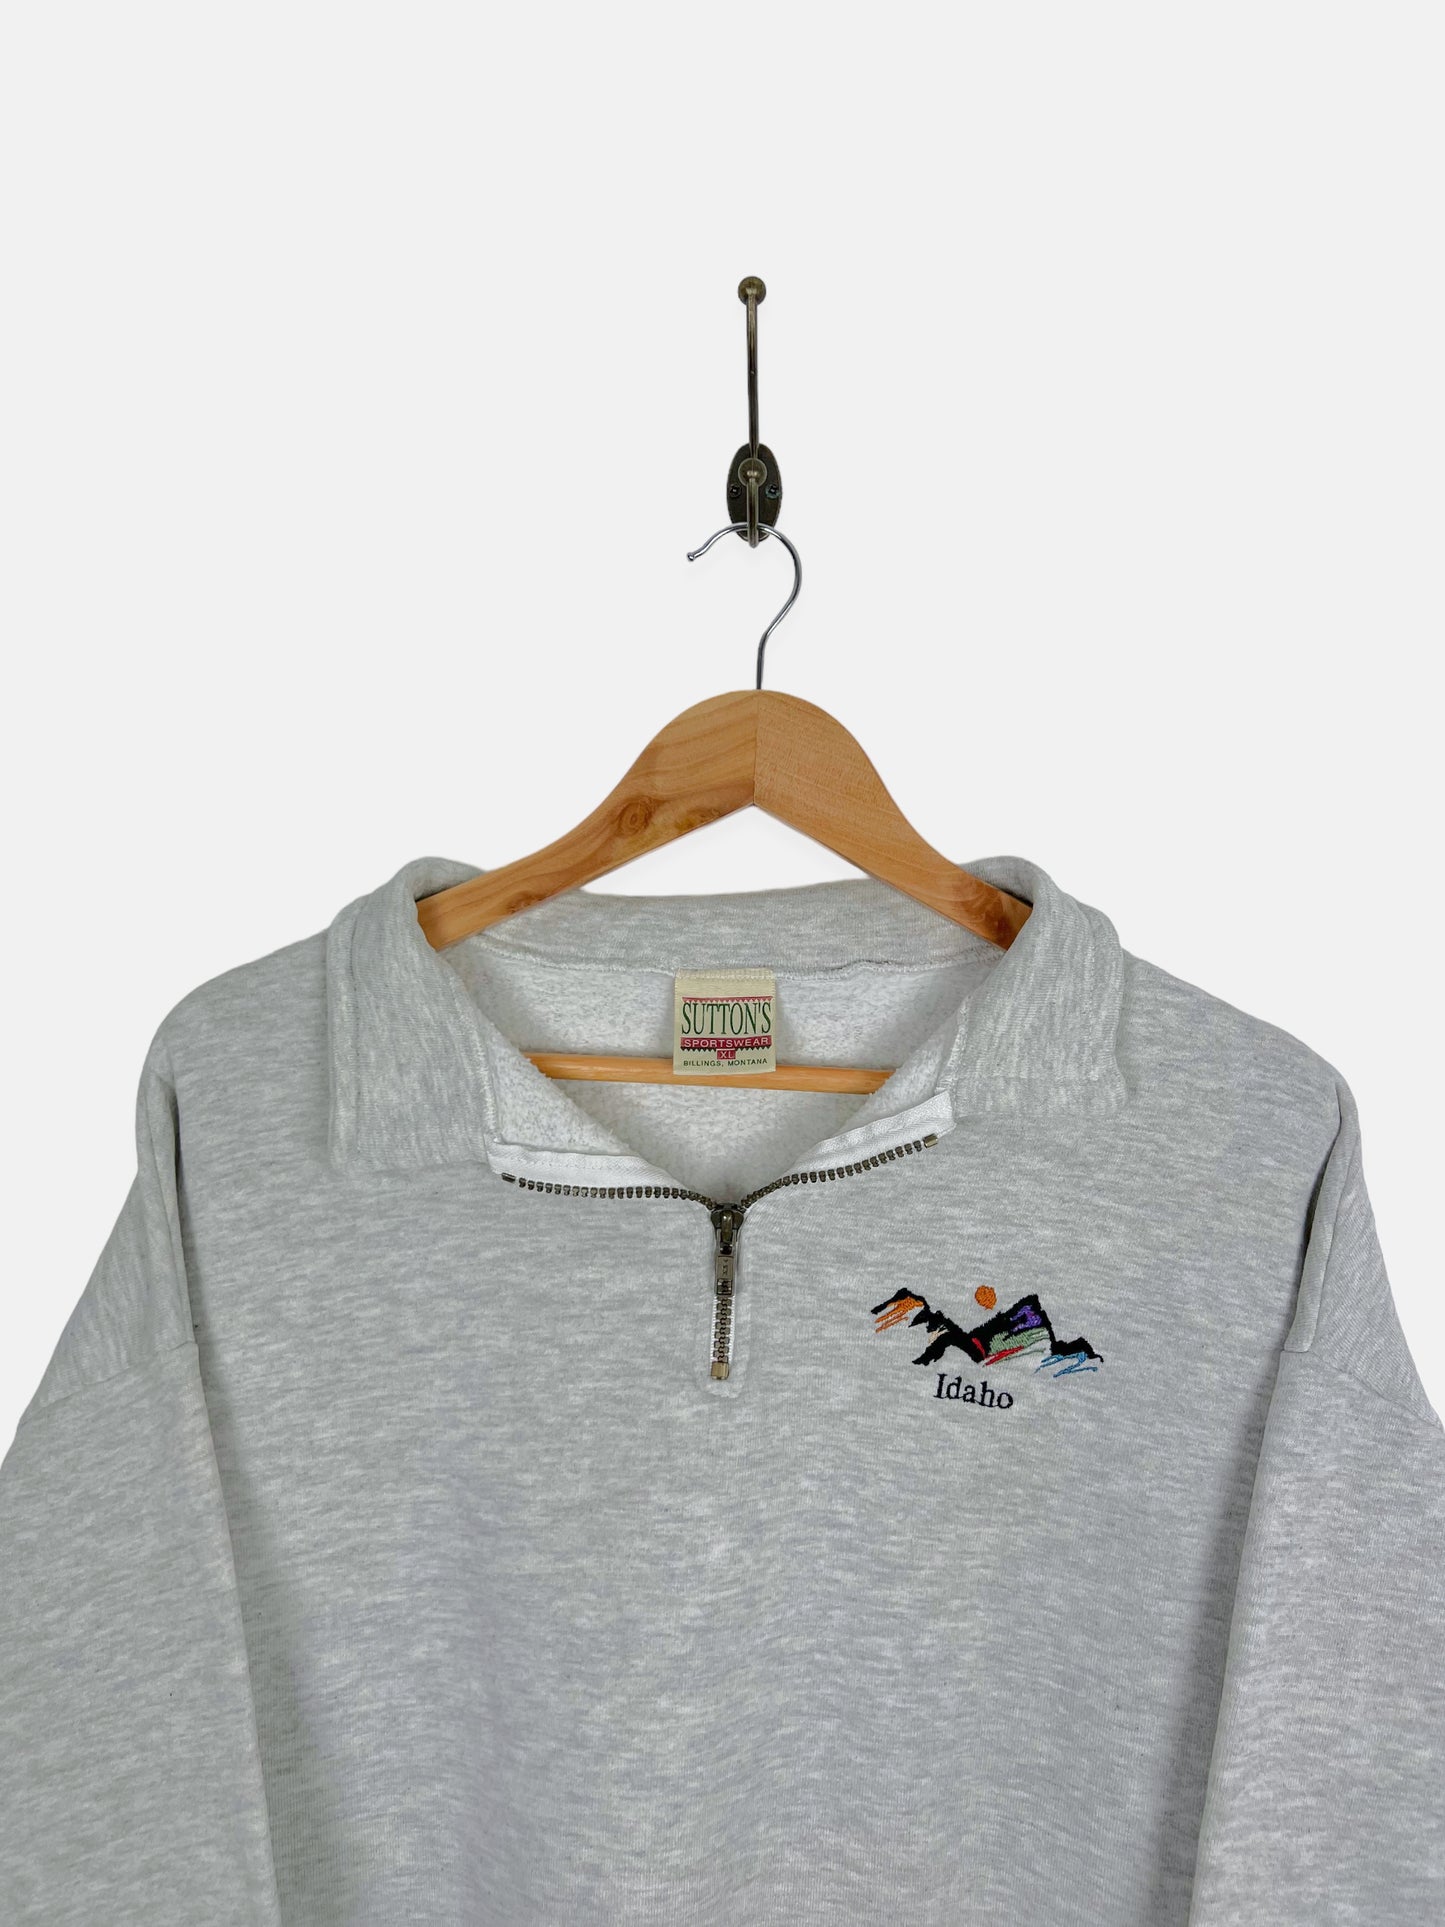 90's Idaho USA Made Embroidered Vintage Quarterzip Sweatshirt Size M-L